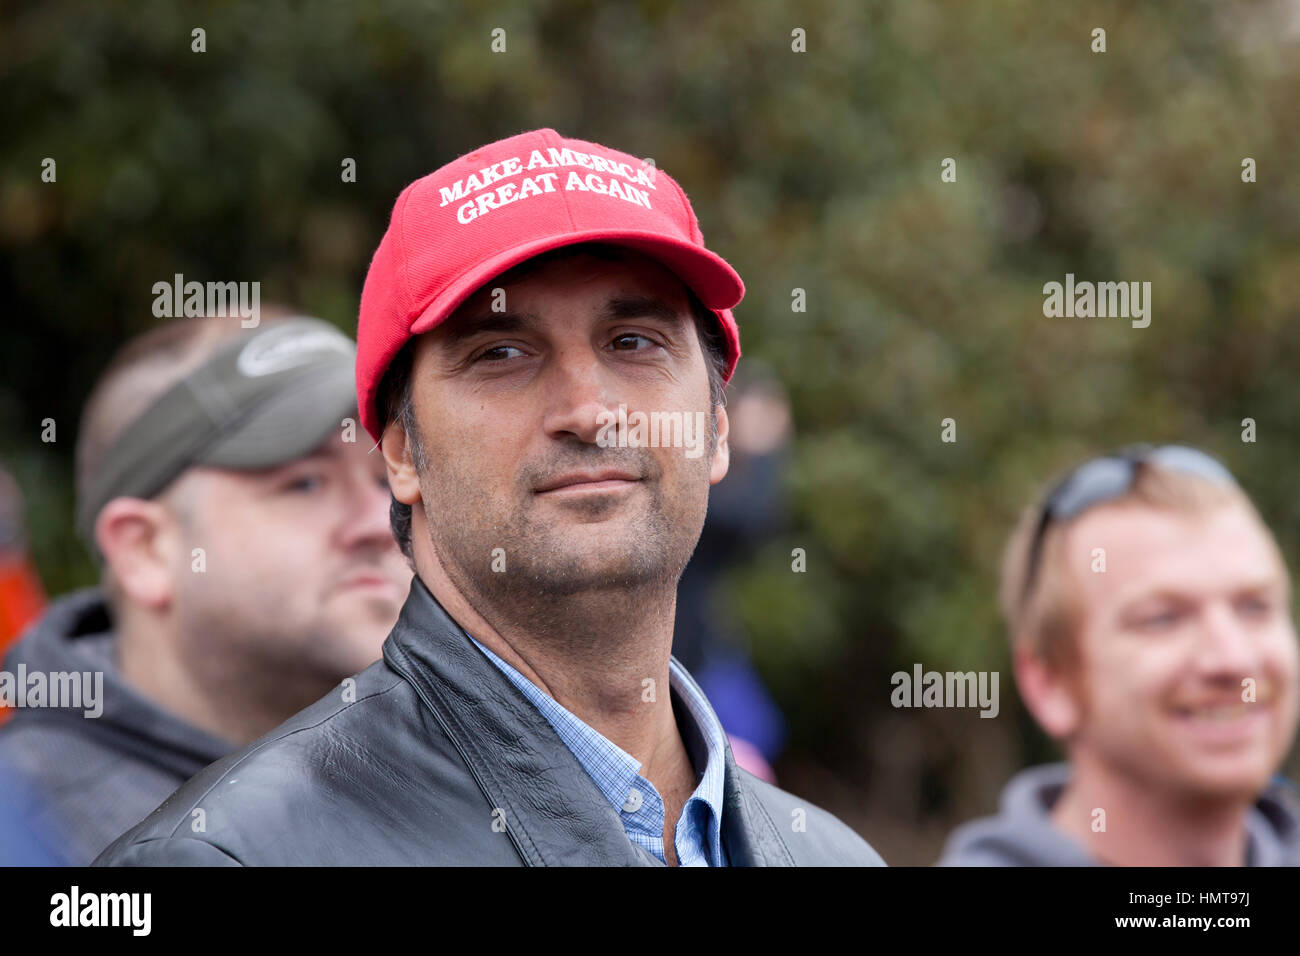 Man wearing 'Make America Great Again' hat - USA Stock Photo